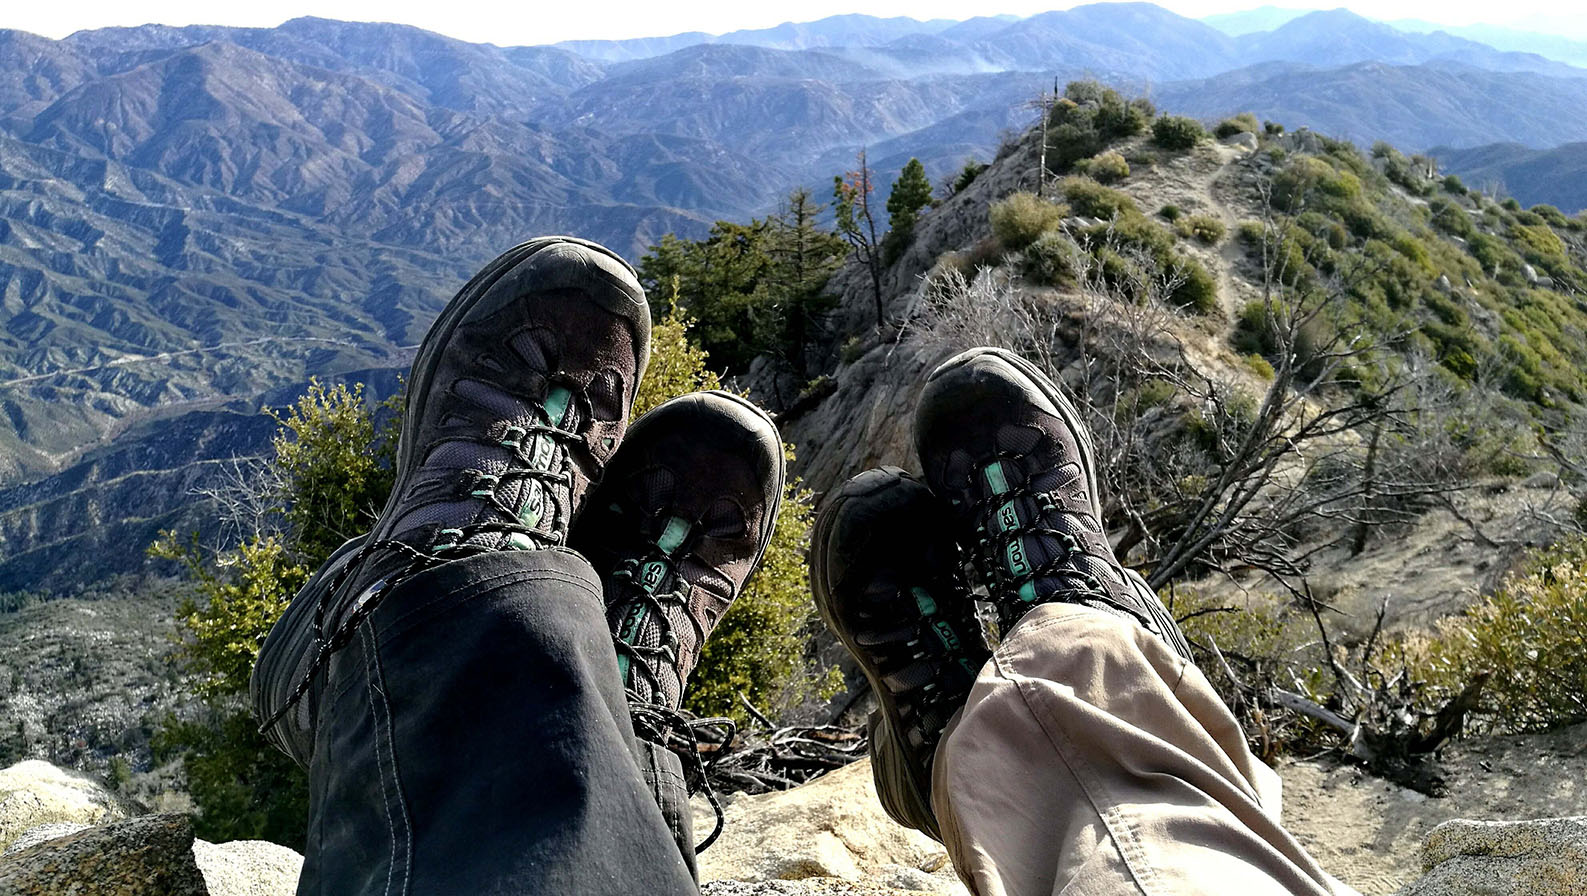 keen vs merrell hiking boots